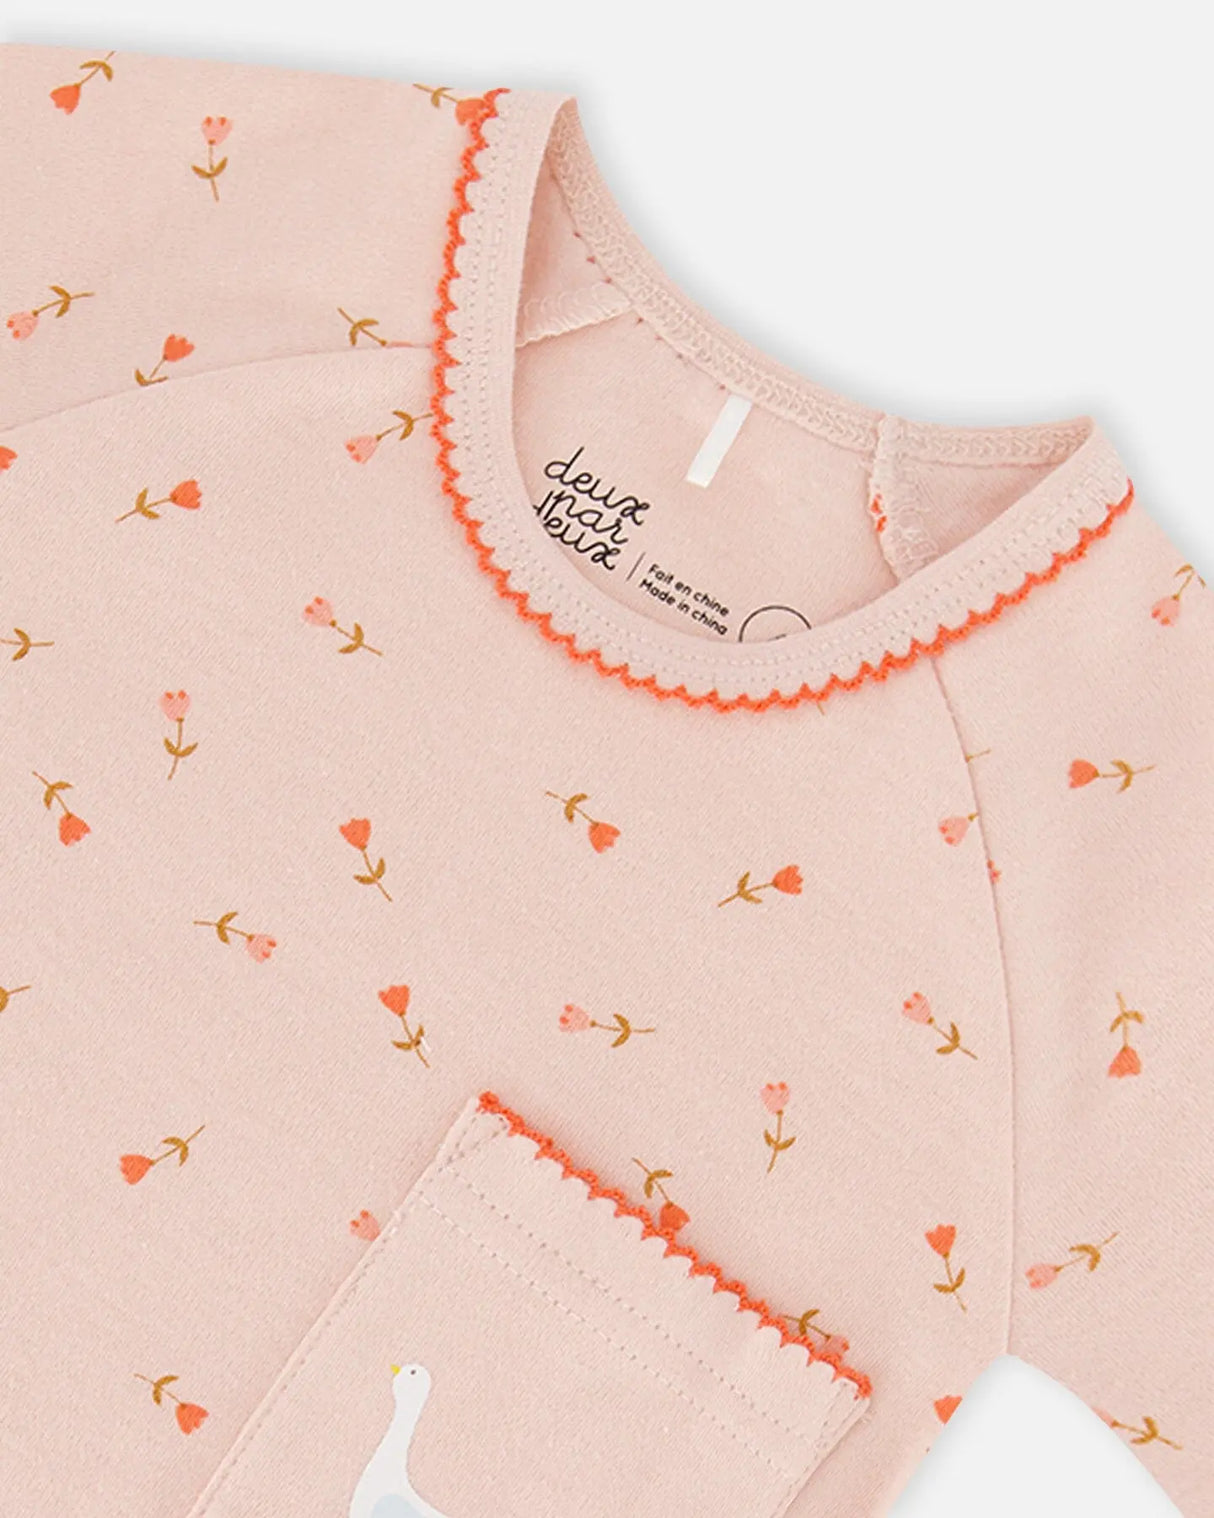 Organic Cotton Two Piece Pajama Set Pink Printed Goose | Deux par Deux | Jenni Kidz